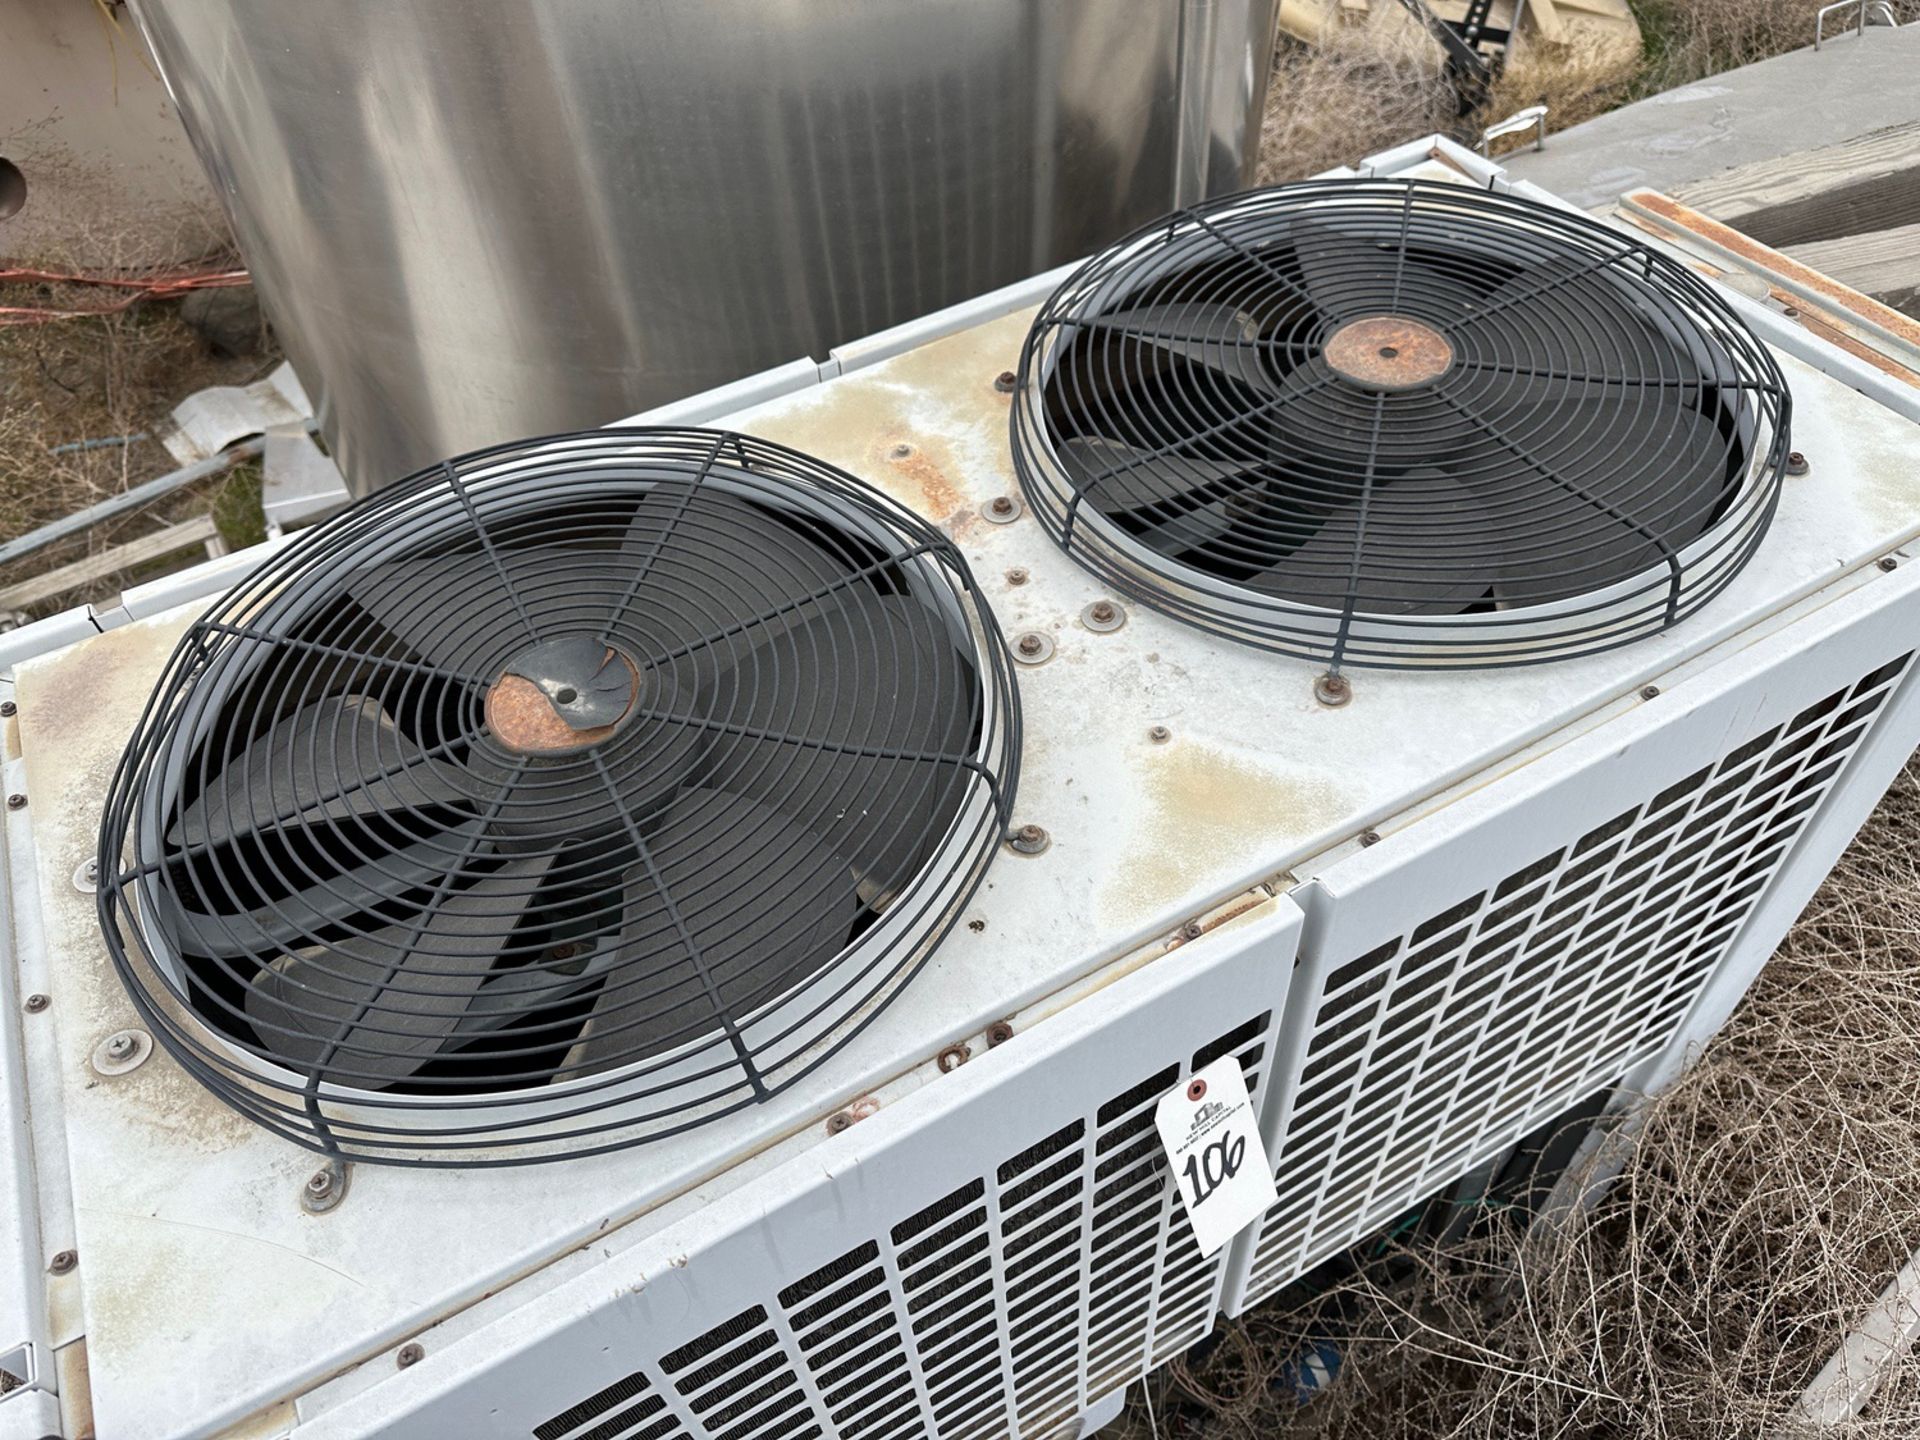 Mitsubishi Cooling Unit (Not Operational) | Rig Fee $225 - Image 2 of 4